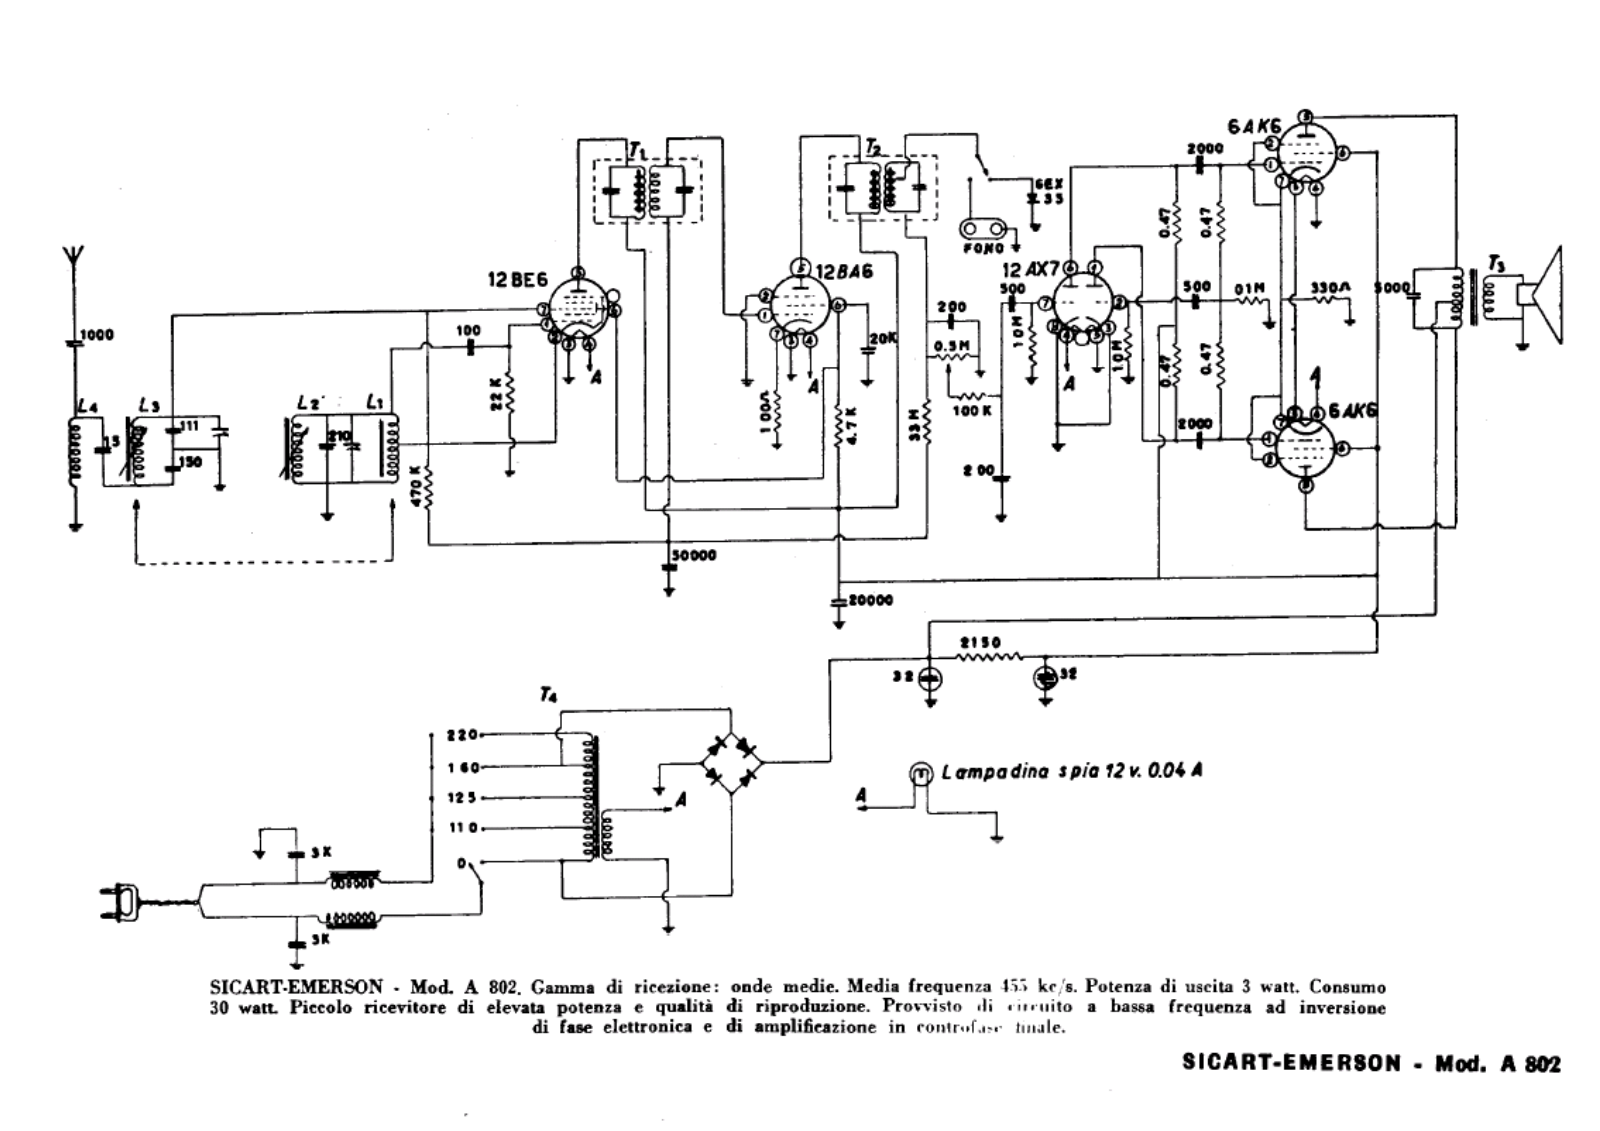 Emerson a802 schematic